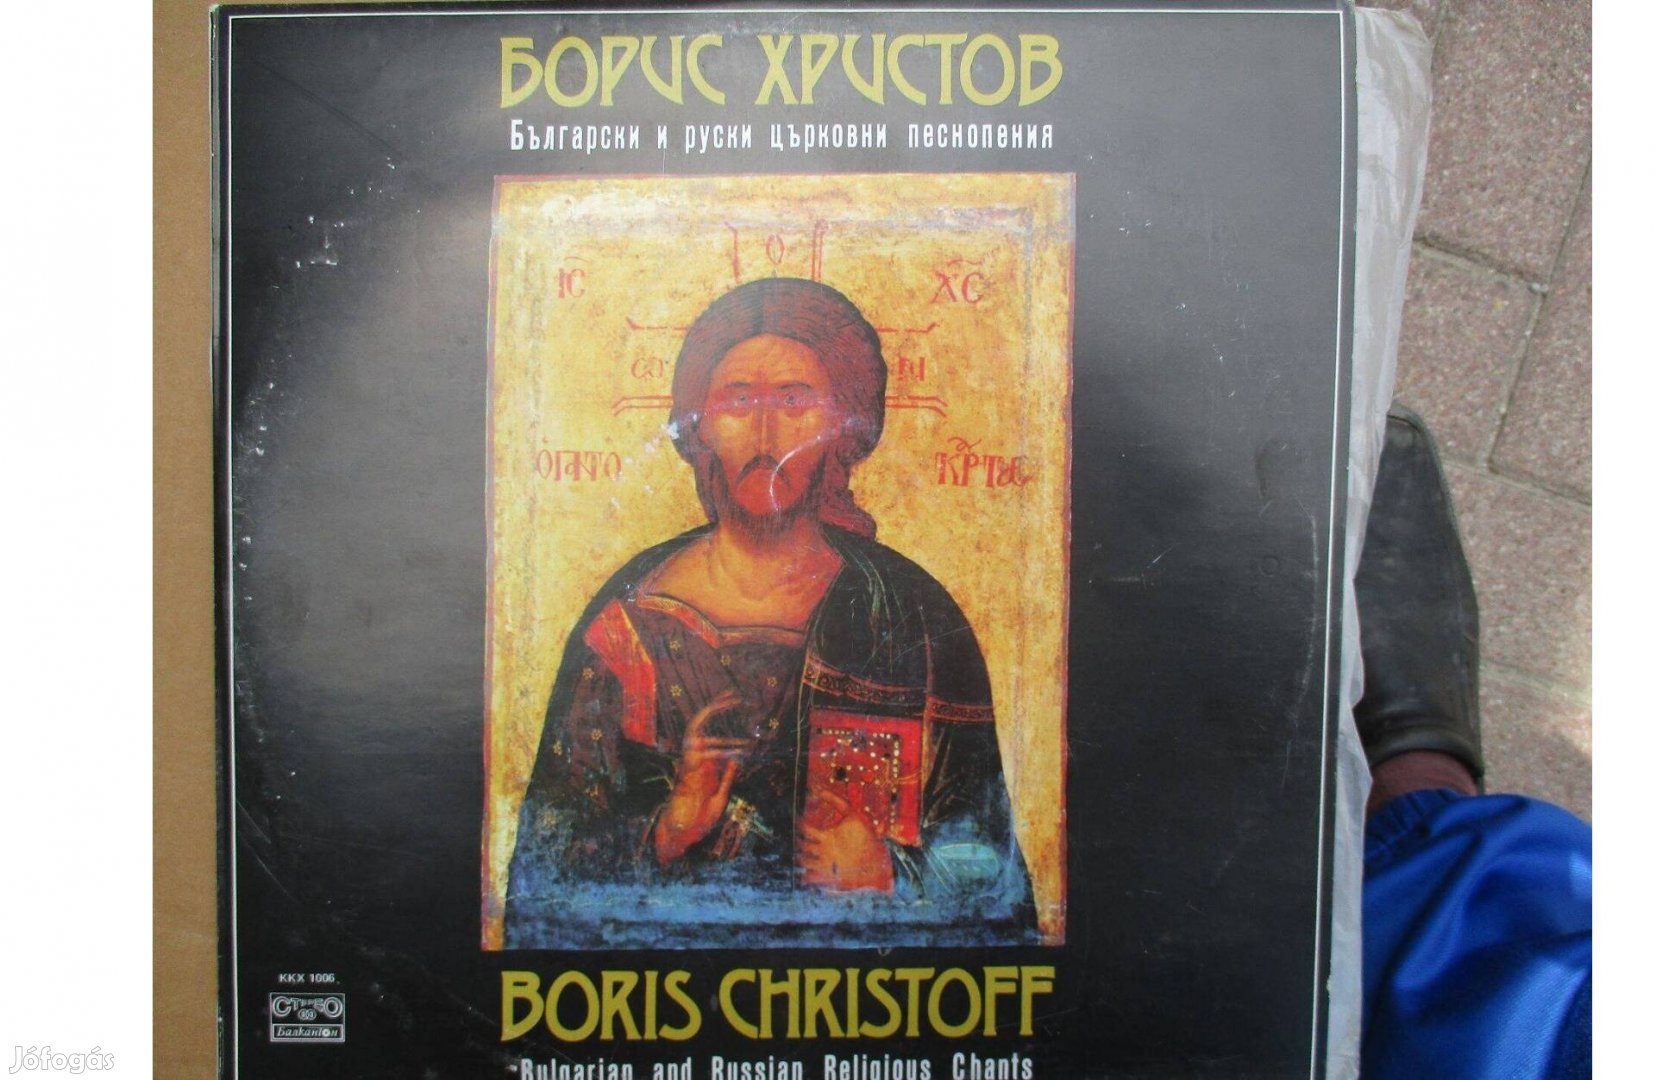 Boris Christoff bakelit hanglemez eladó